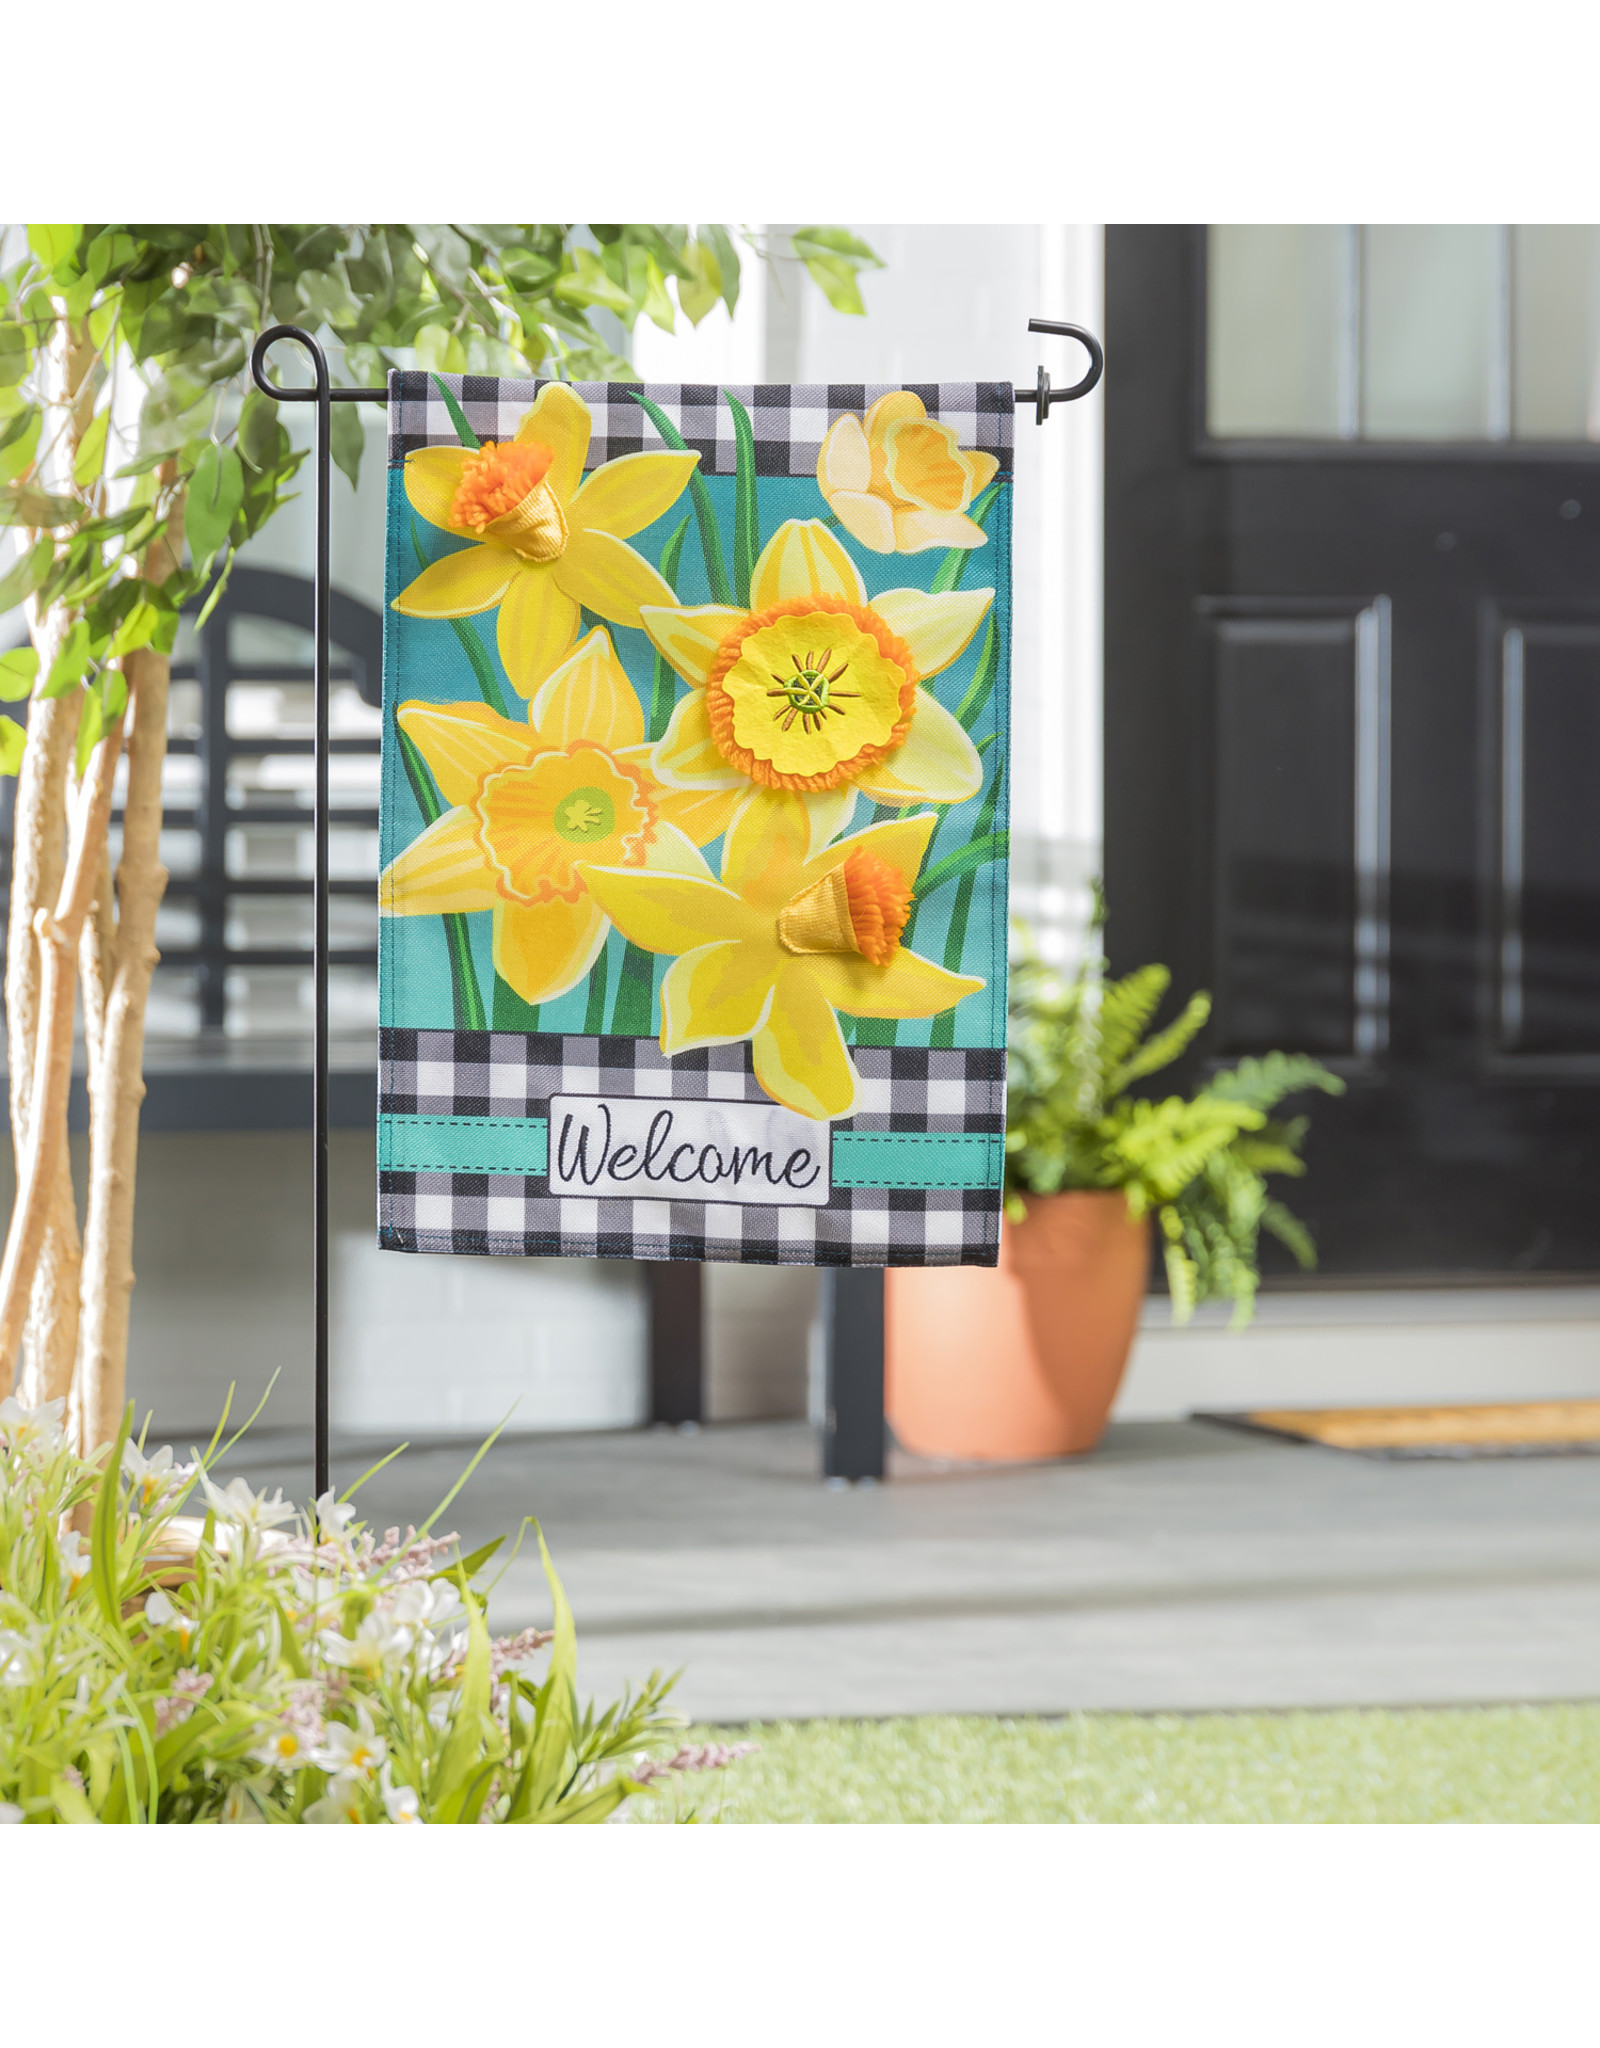 Evergreen Enterprises Daffodil Garden Garden Burlap Flag